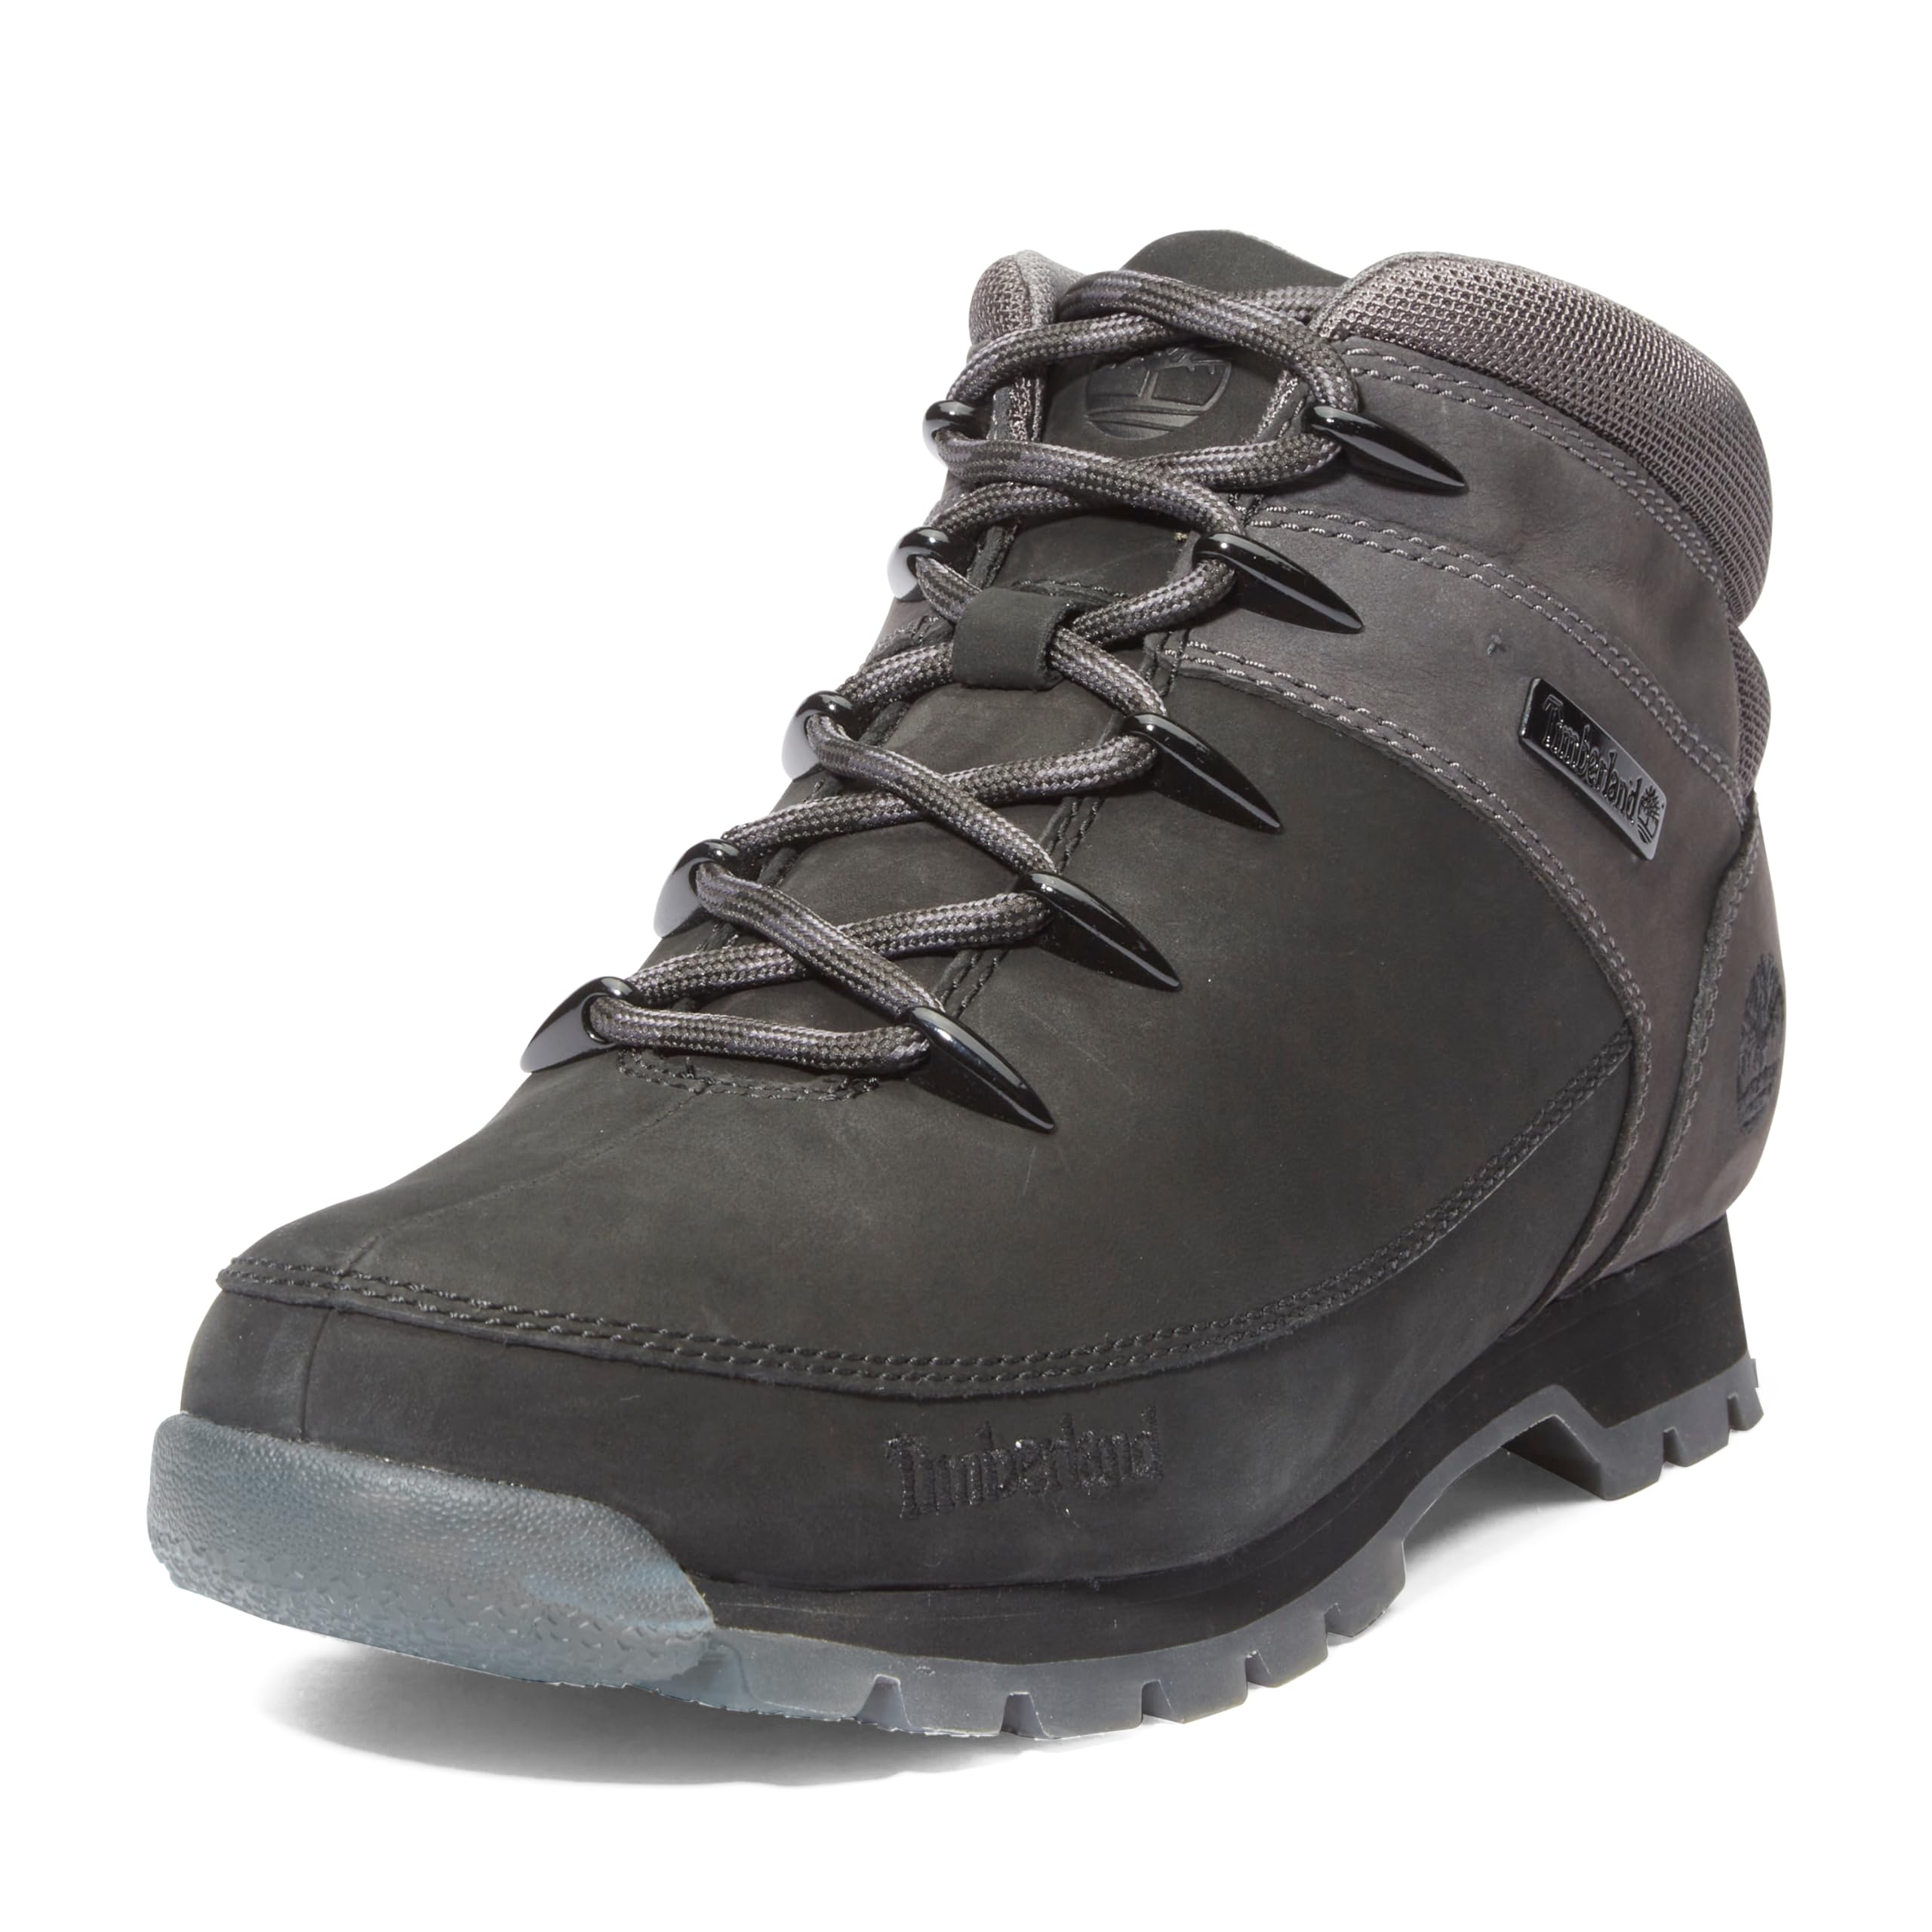 Timberland Herren Euro Sprint Hiker Chukka Boots, Schwarz (Black/Grey), 44 EU